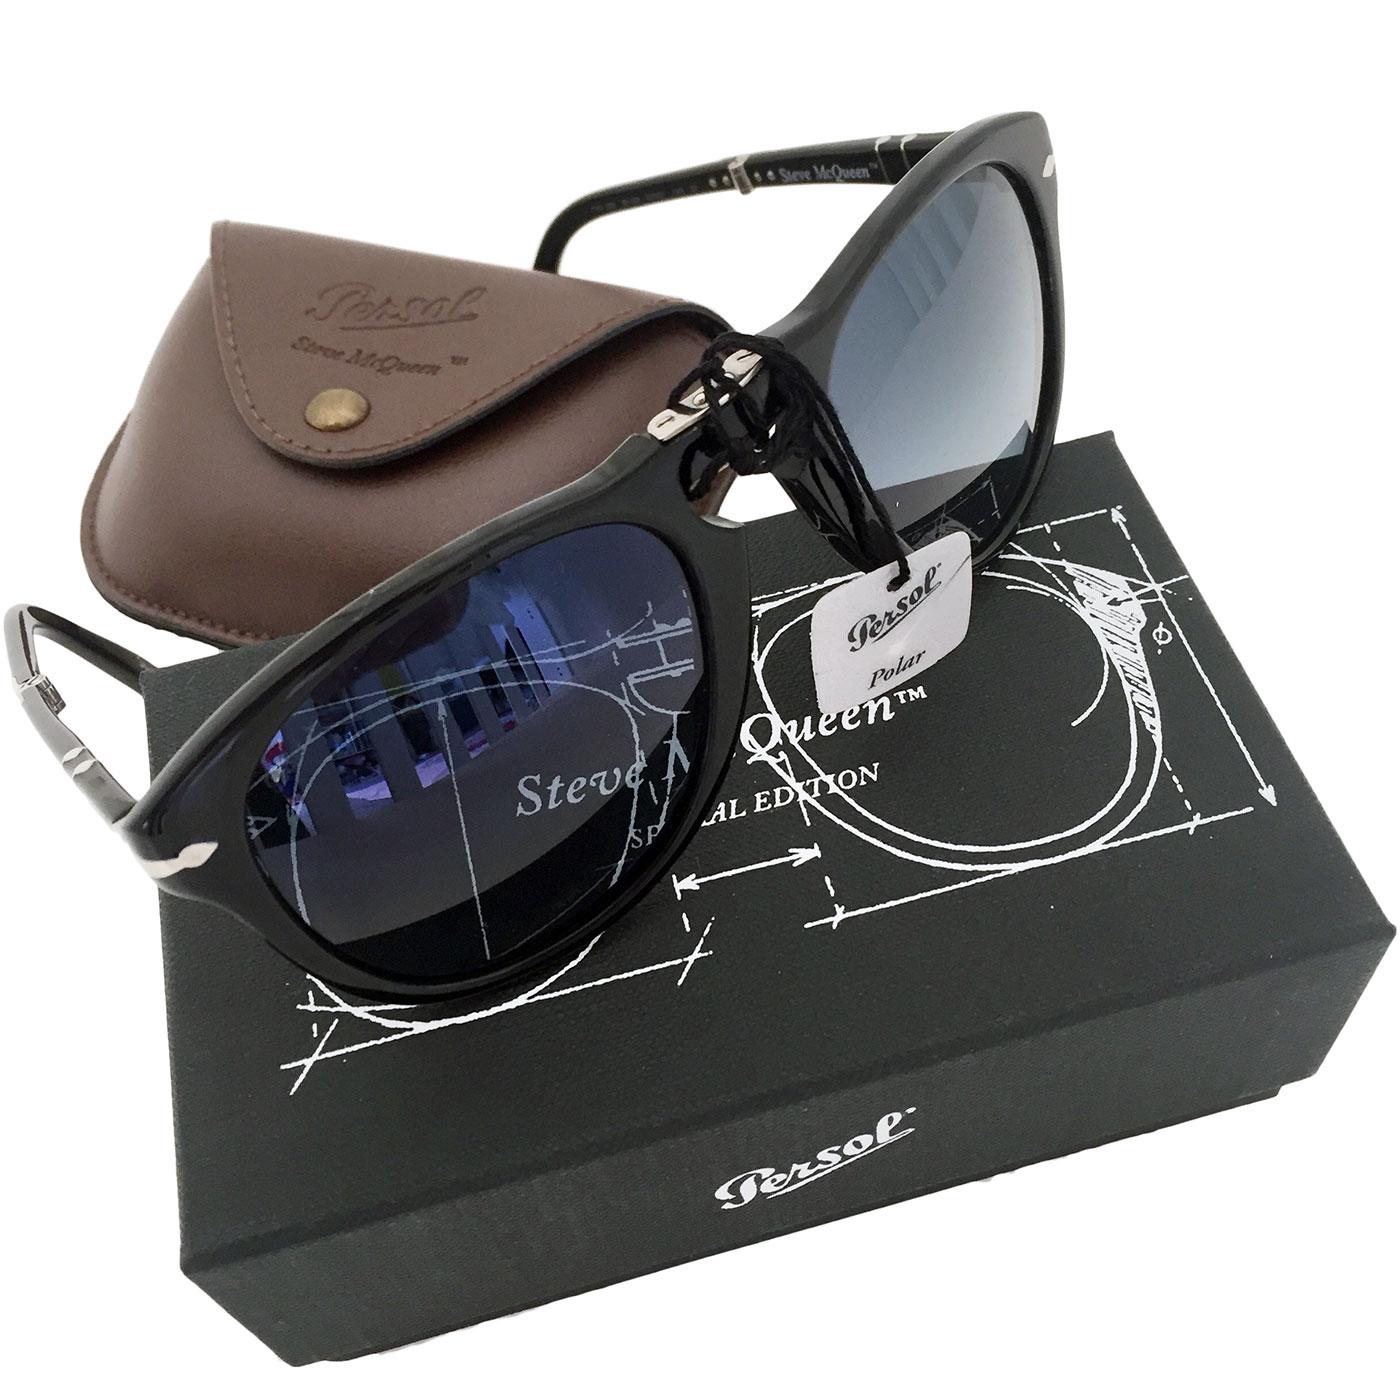 PERSOL Steve McQueen 714SM Foldable Sunglasses in Black